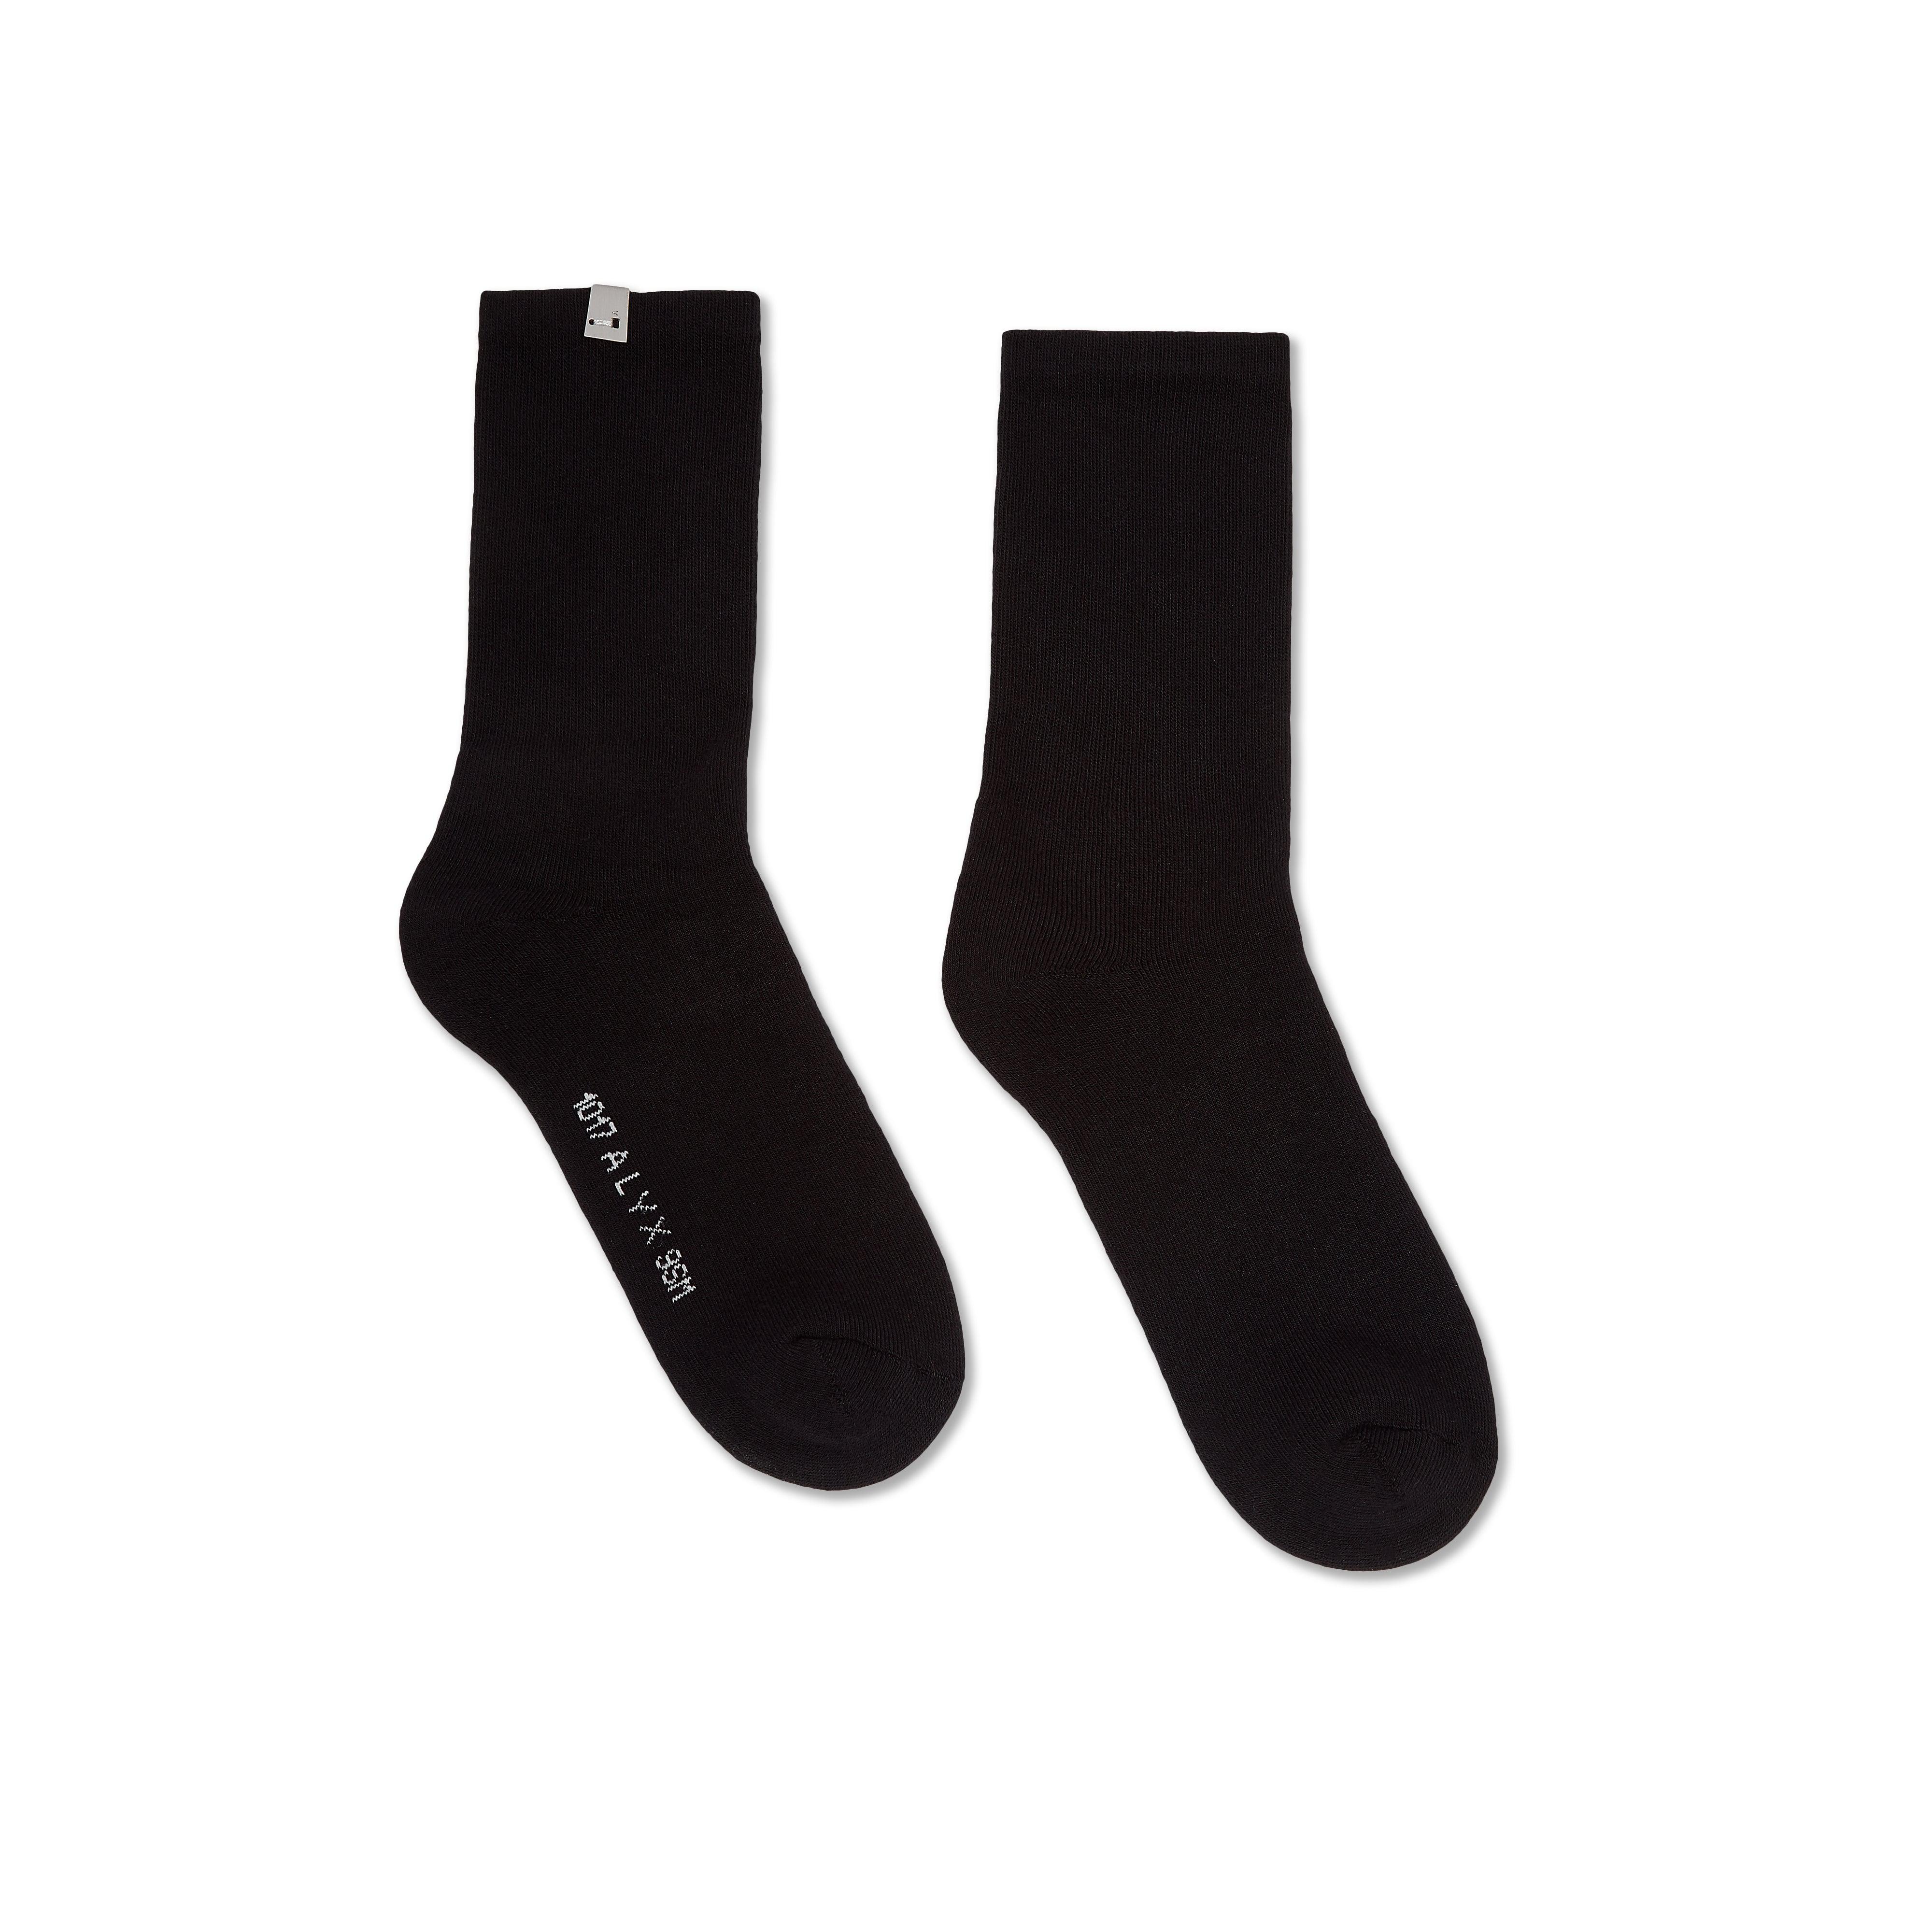 Alyx Lightercap Socks (Black) by ALYX